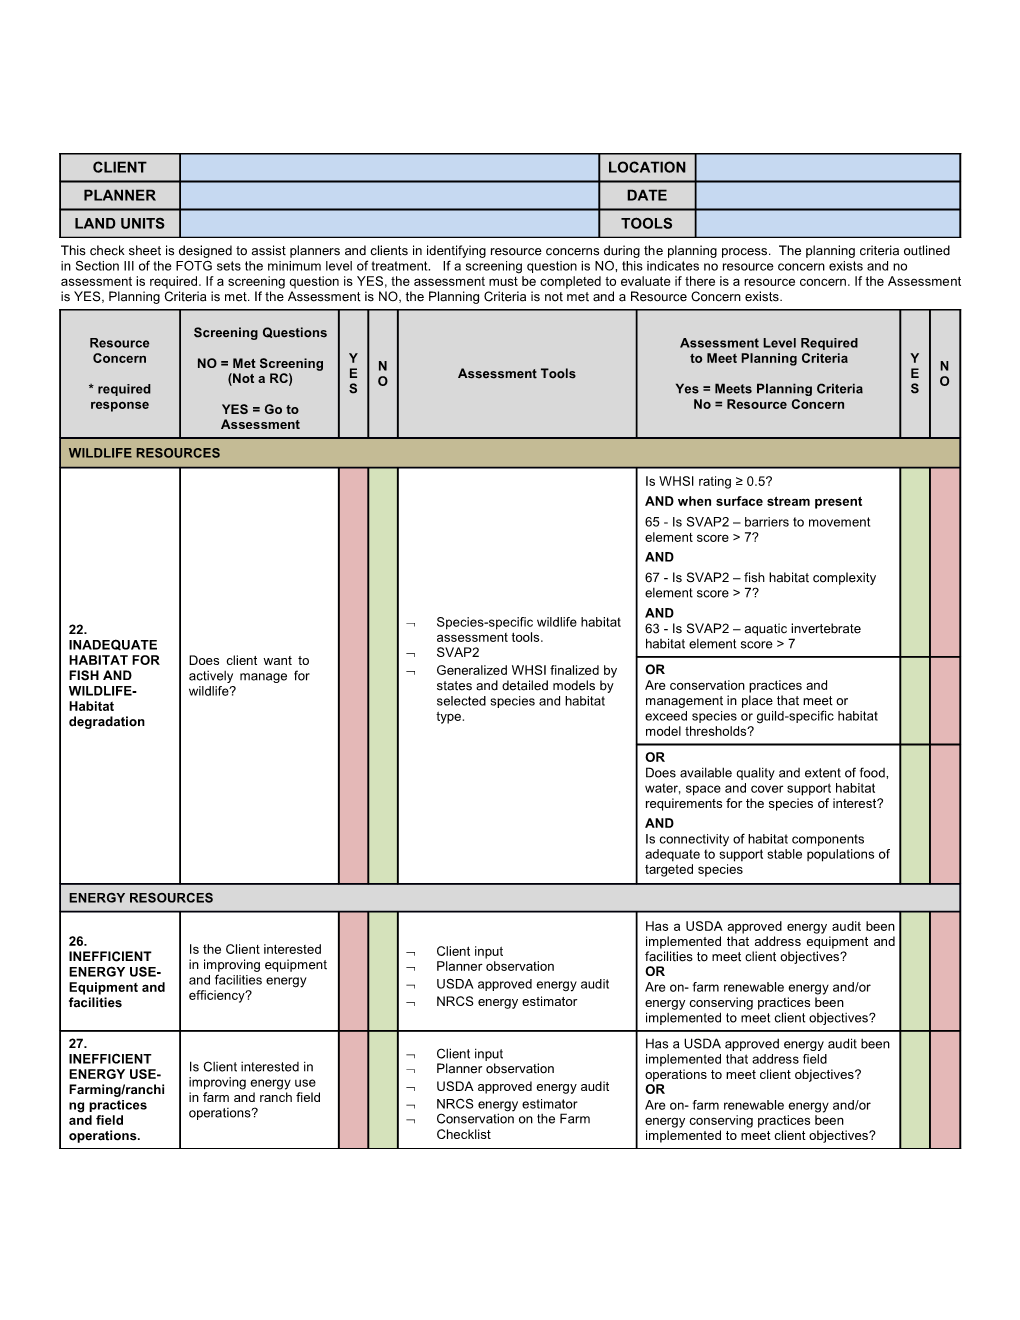 Checklist of Resource Concerns s1